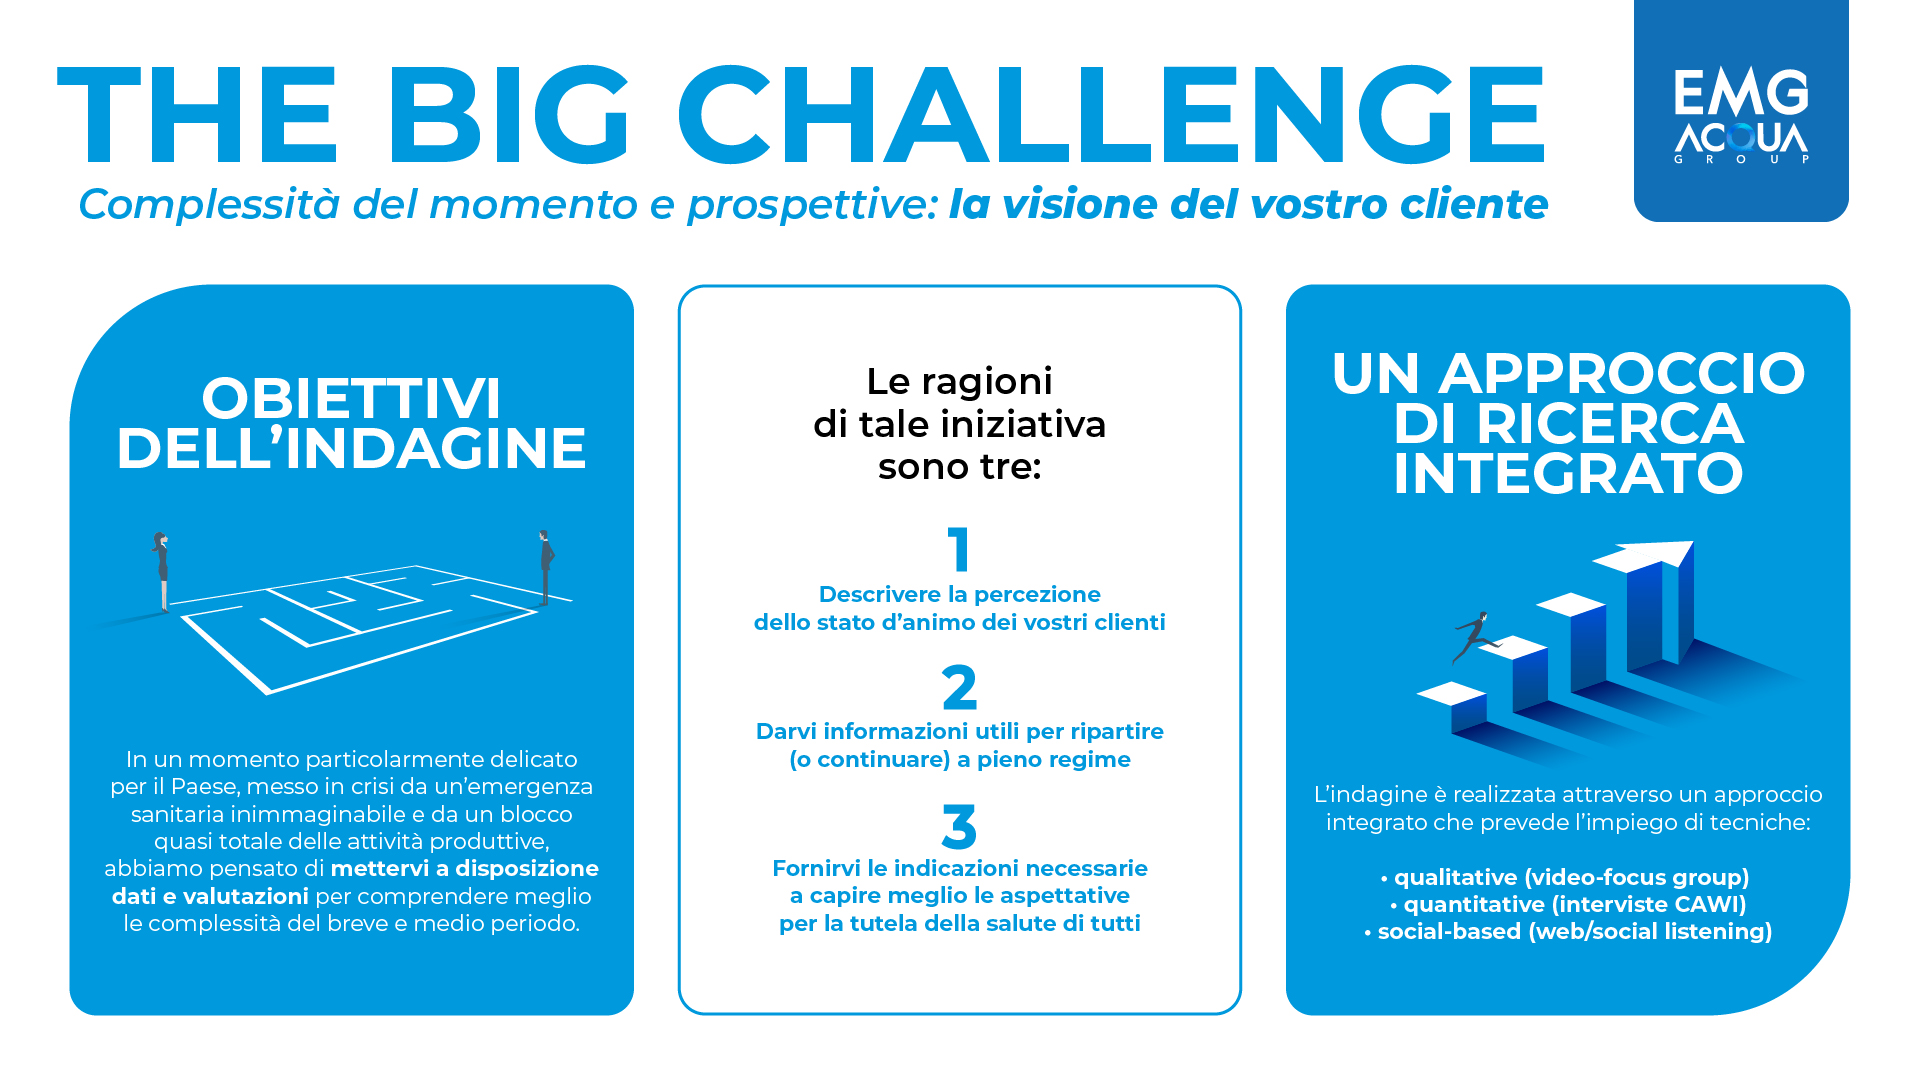 EMG Acqua lancia The Big Challenge